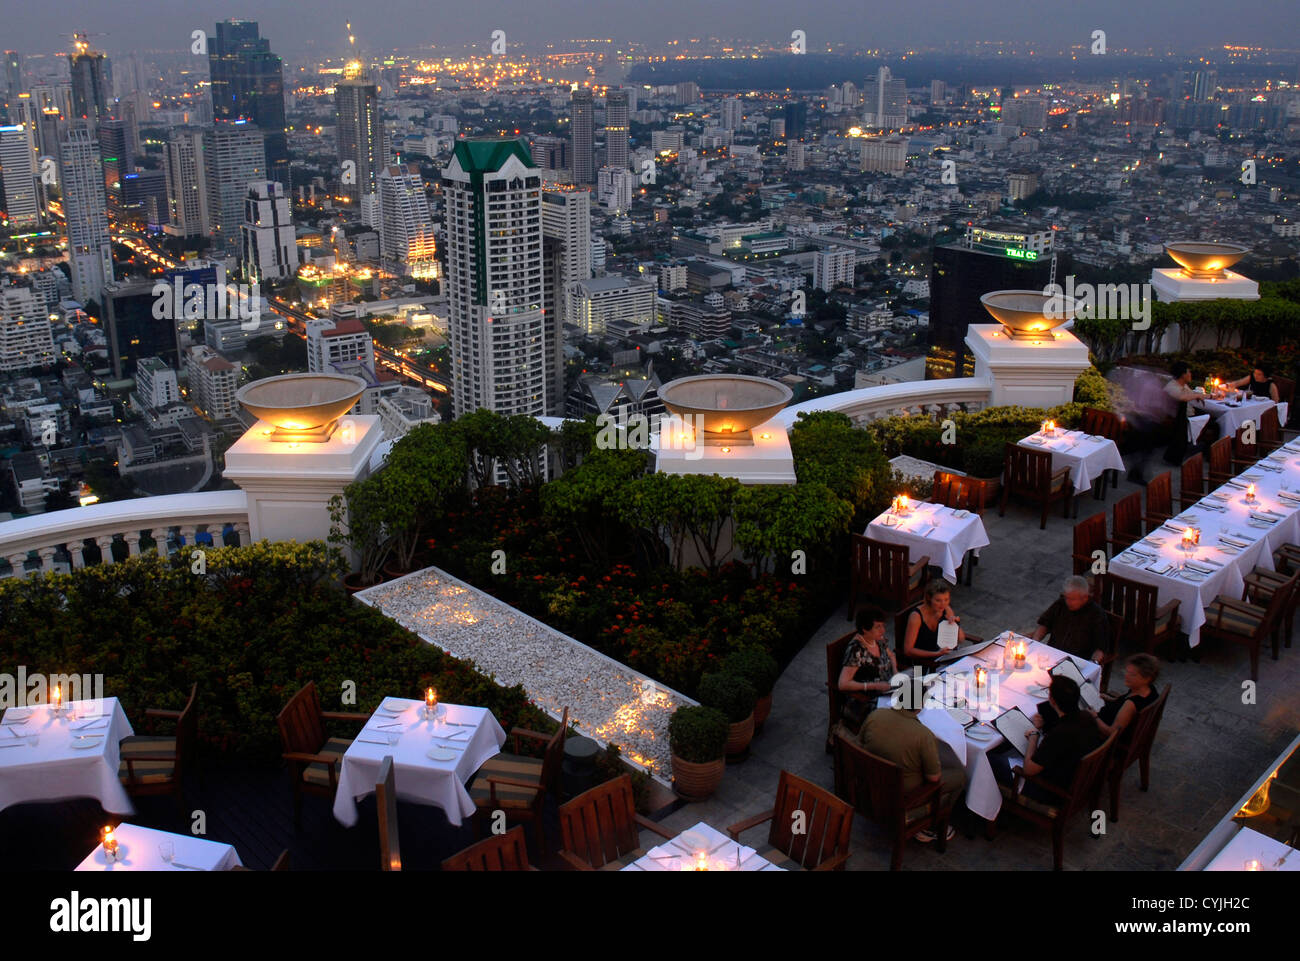 Restaurant, Sirocco, Dome,  State Tower. Bangkok, Sky Bar, Sight, Thailand, Asia Stock Photo